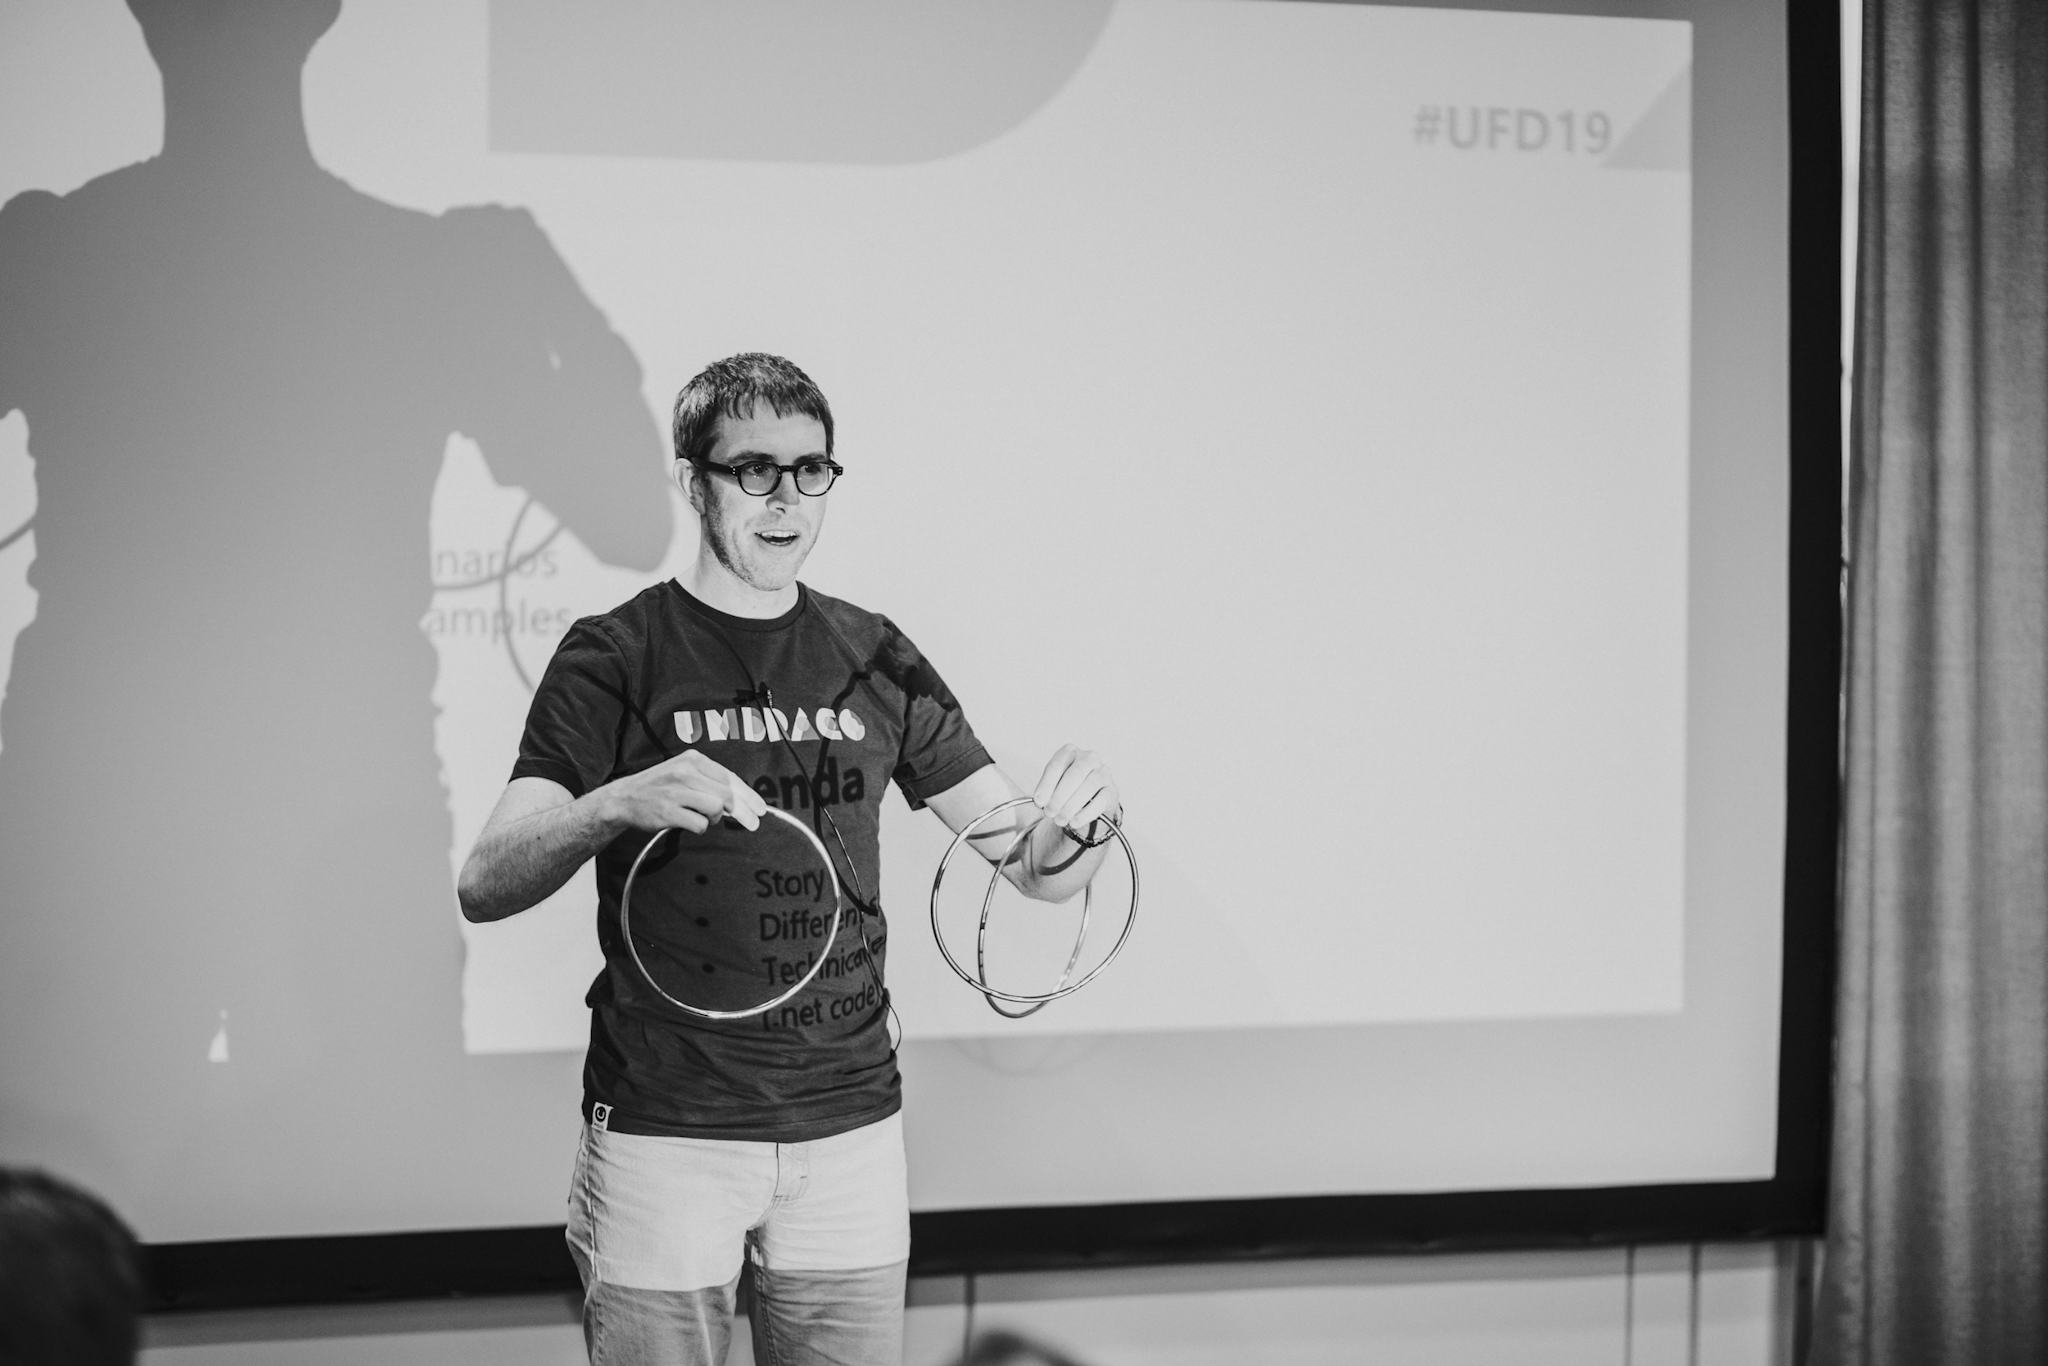 Umbraco-Entwickler Damiaan Peeters als Speaker auf dem Umbraco-Festival Deutschland 2019